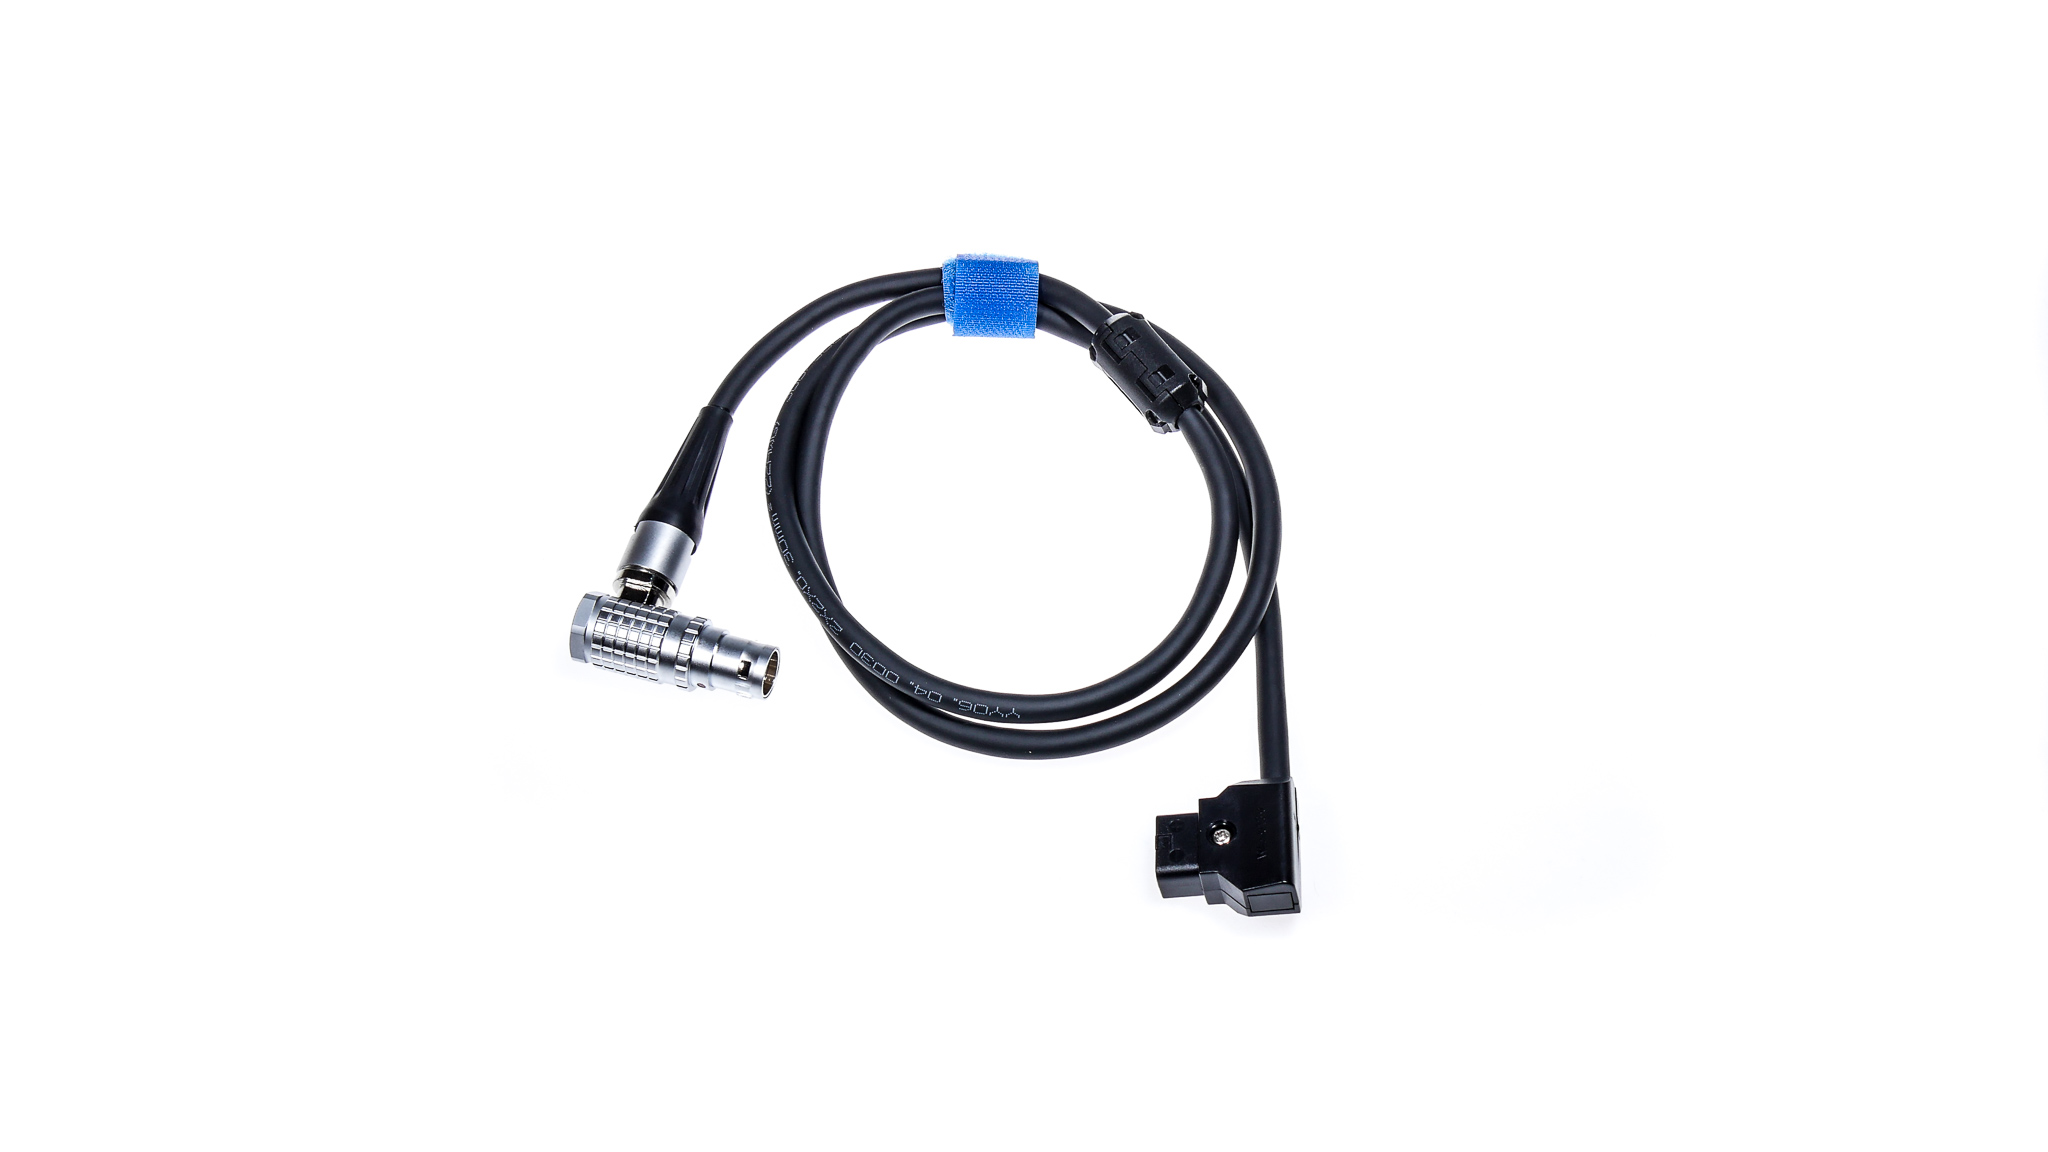 ARRI Alexa Mini D-Tap Power Cable